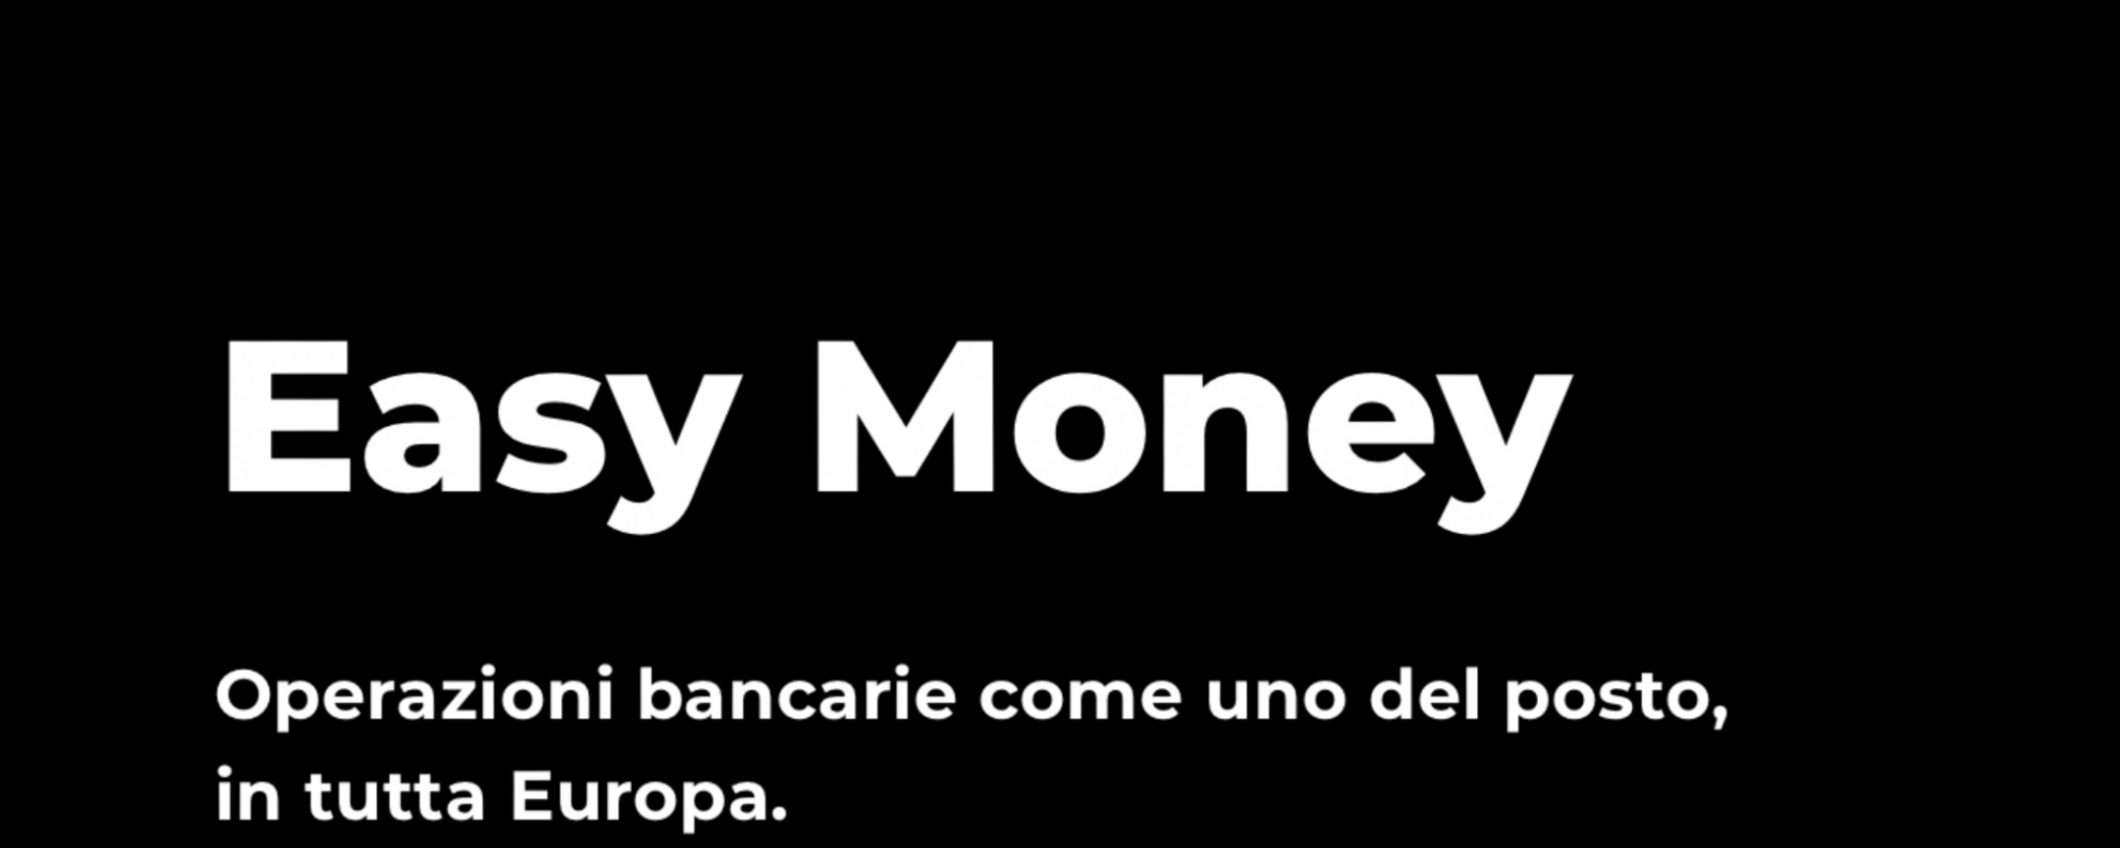 Bunq Easy Money: conto corrente smart da 8,99€